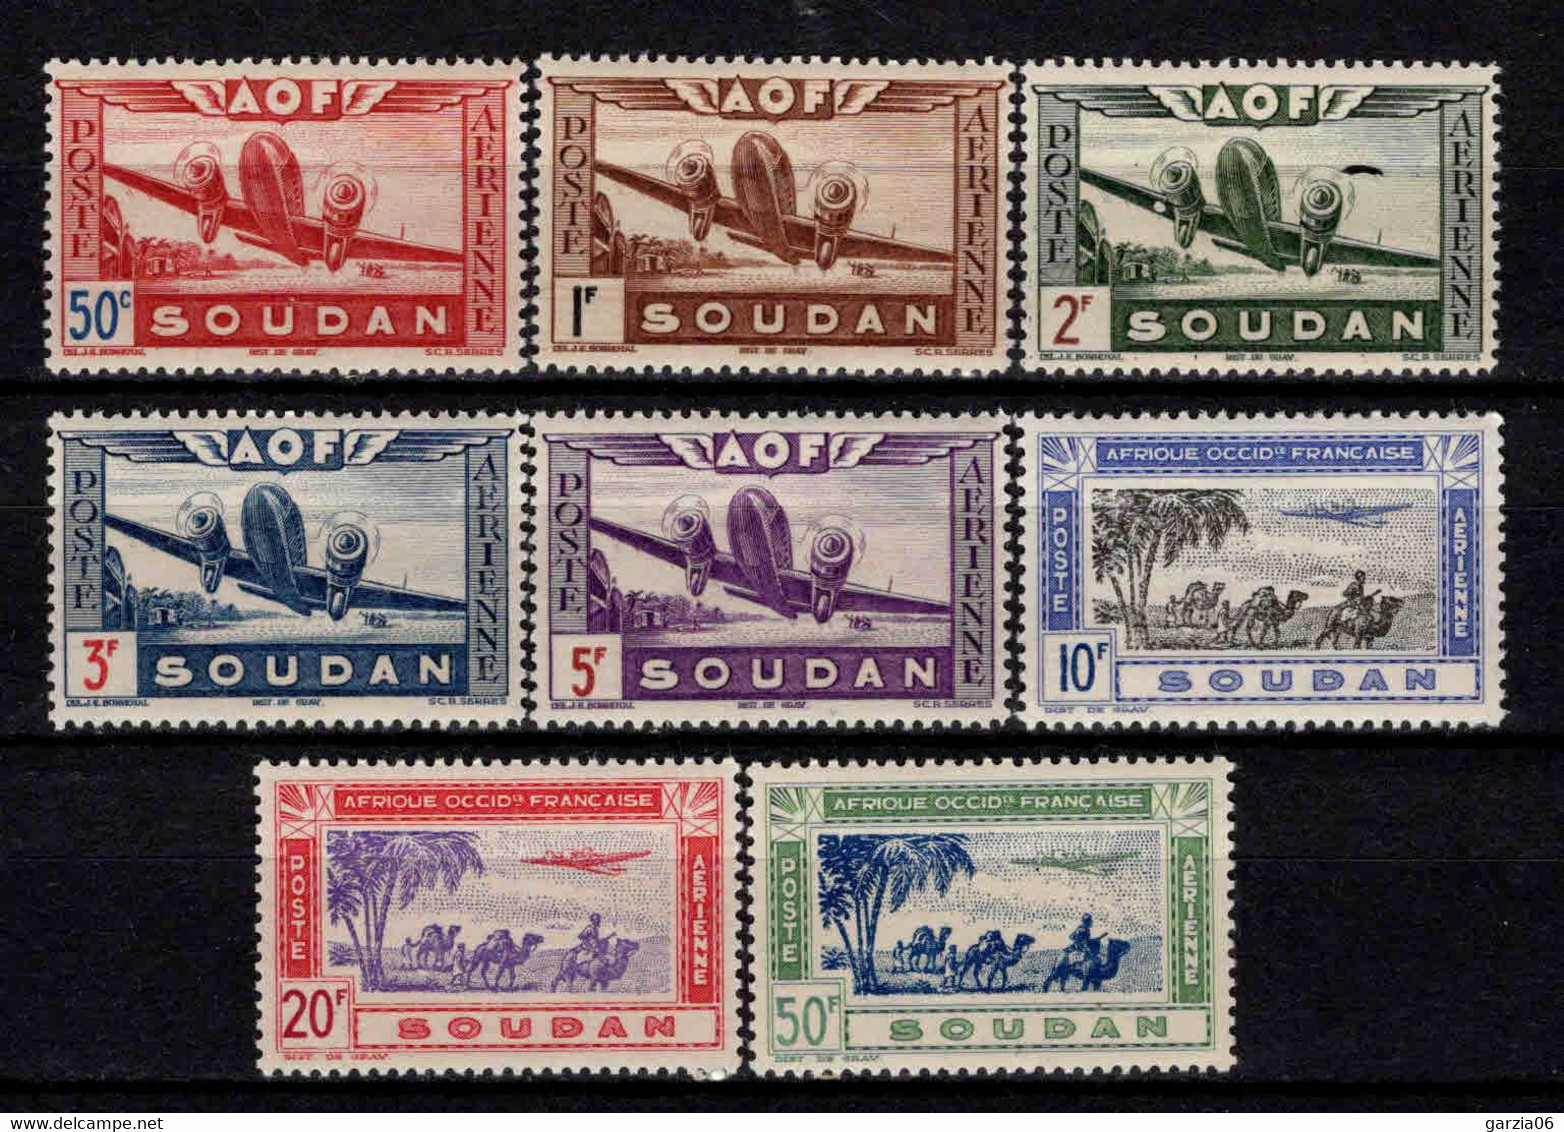 Soudan - 1942  - Avion En Vol - PA 10 à 17  - Neuf ** - MNH - Unused Stamps